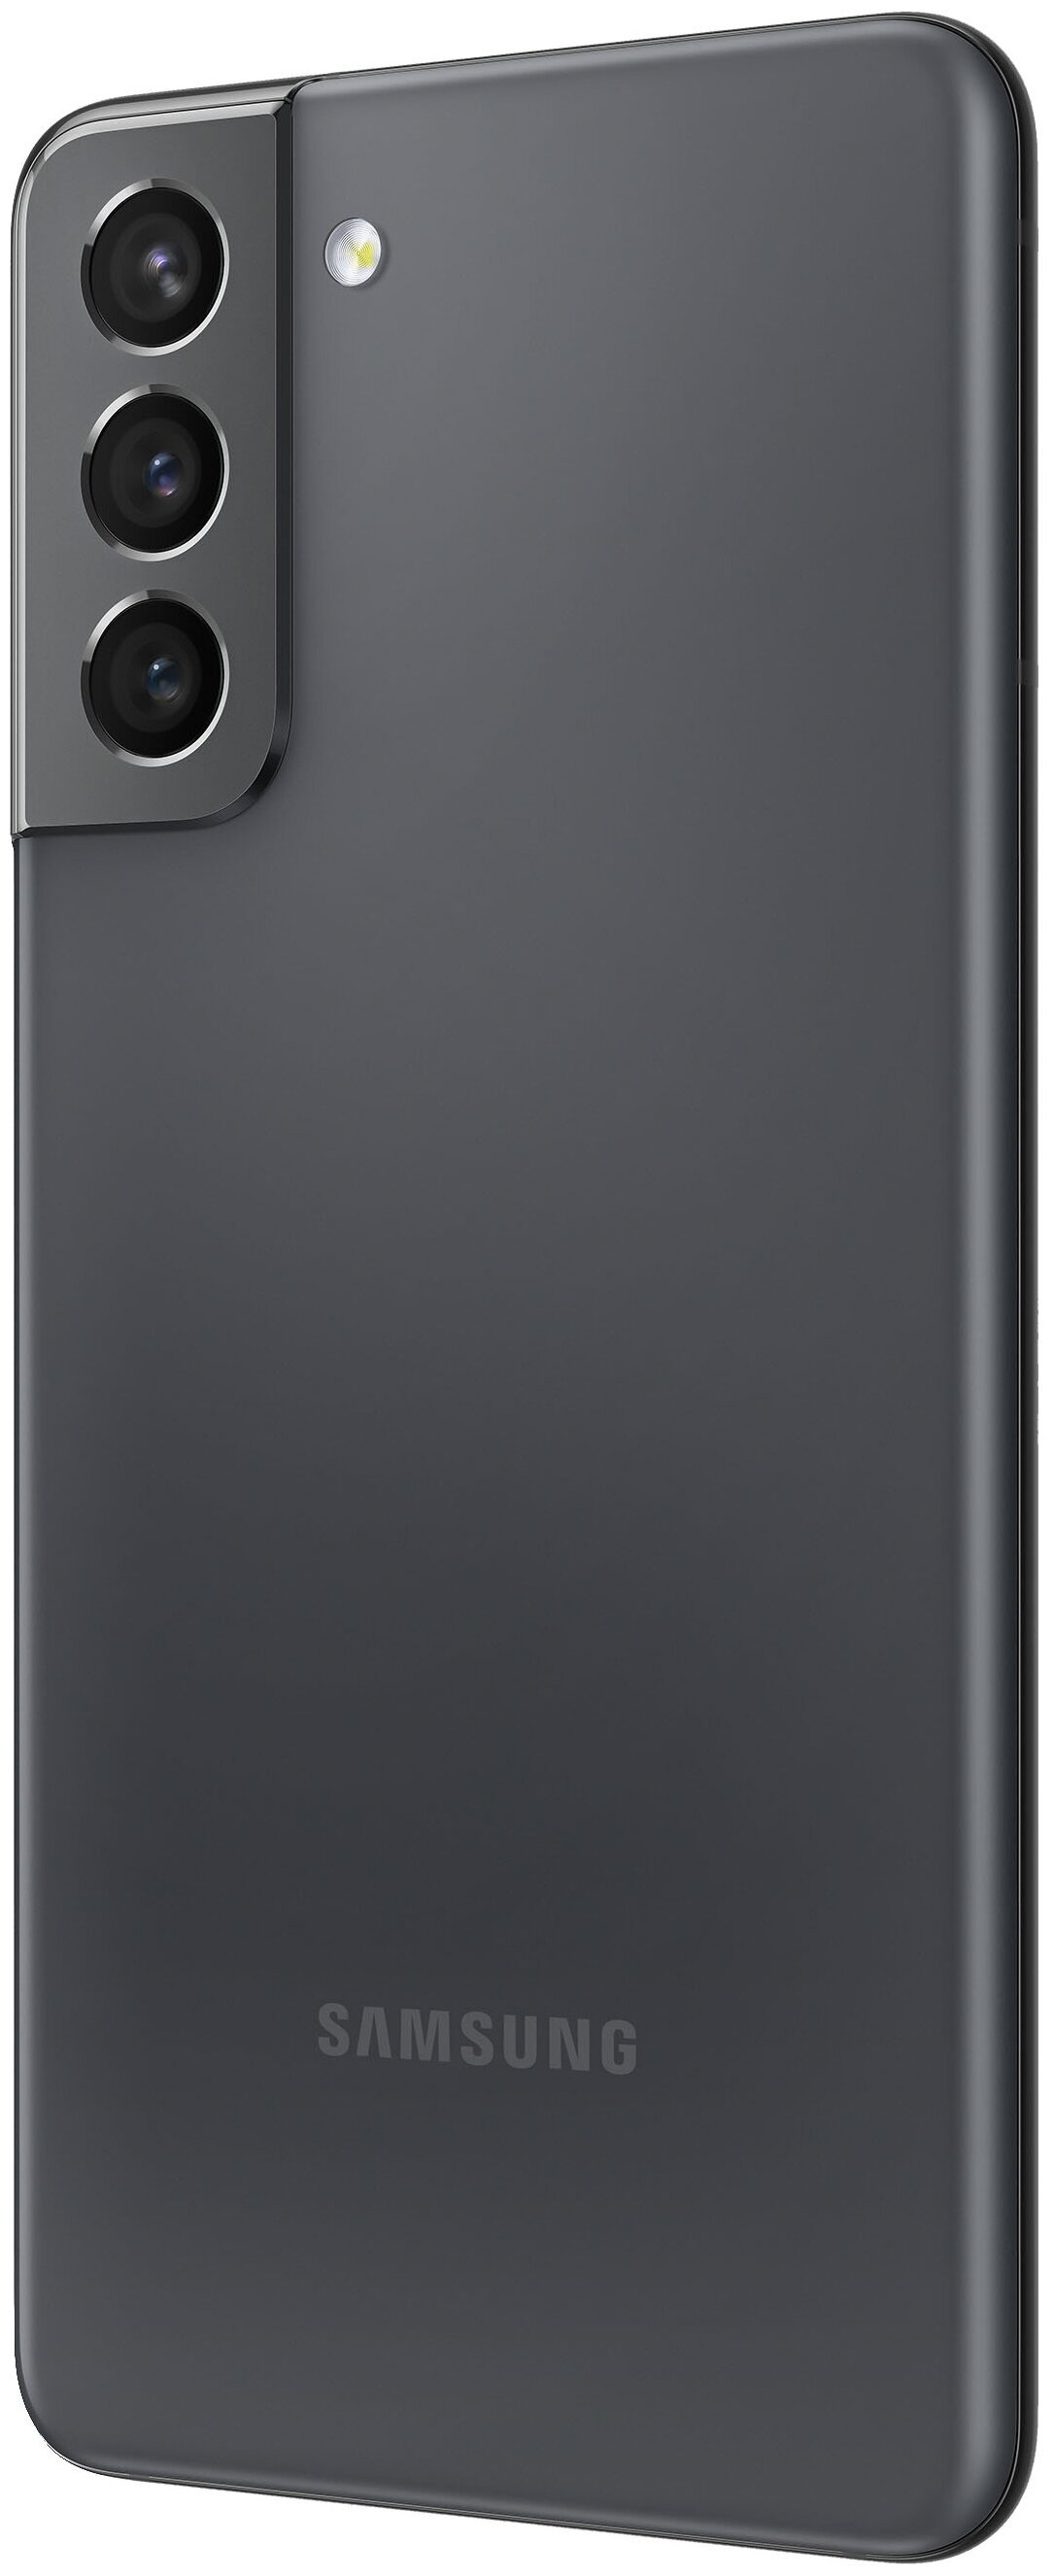 Samsung Galaxy S21 5G (SM-G991B) - операционная система: Android 11